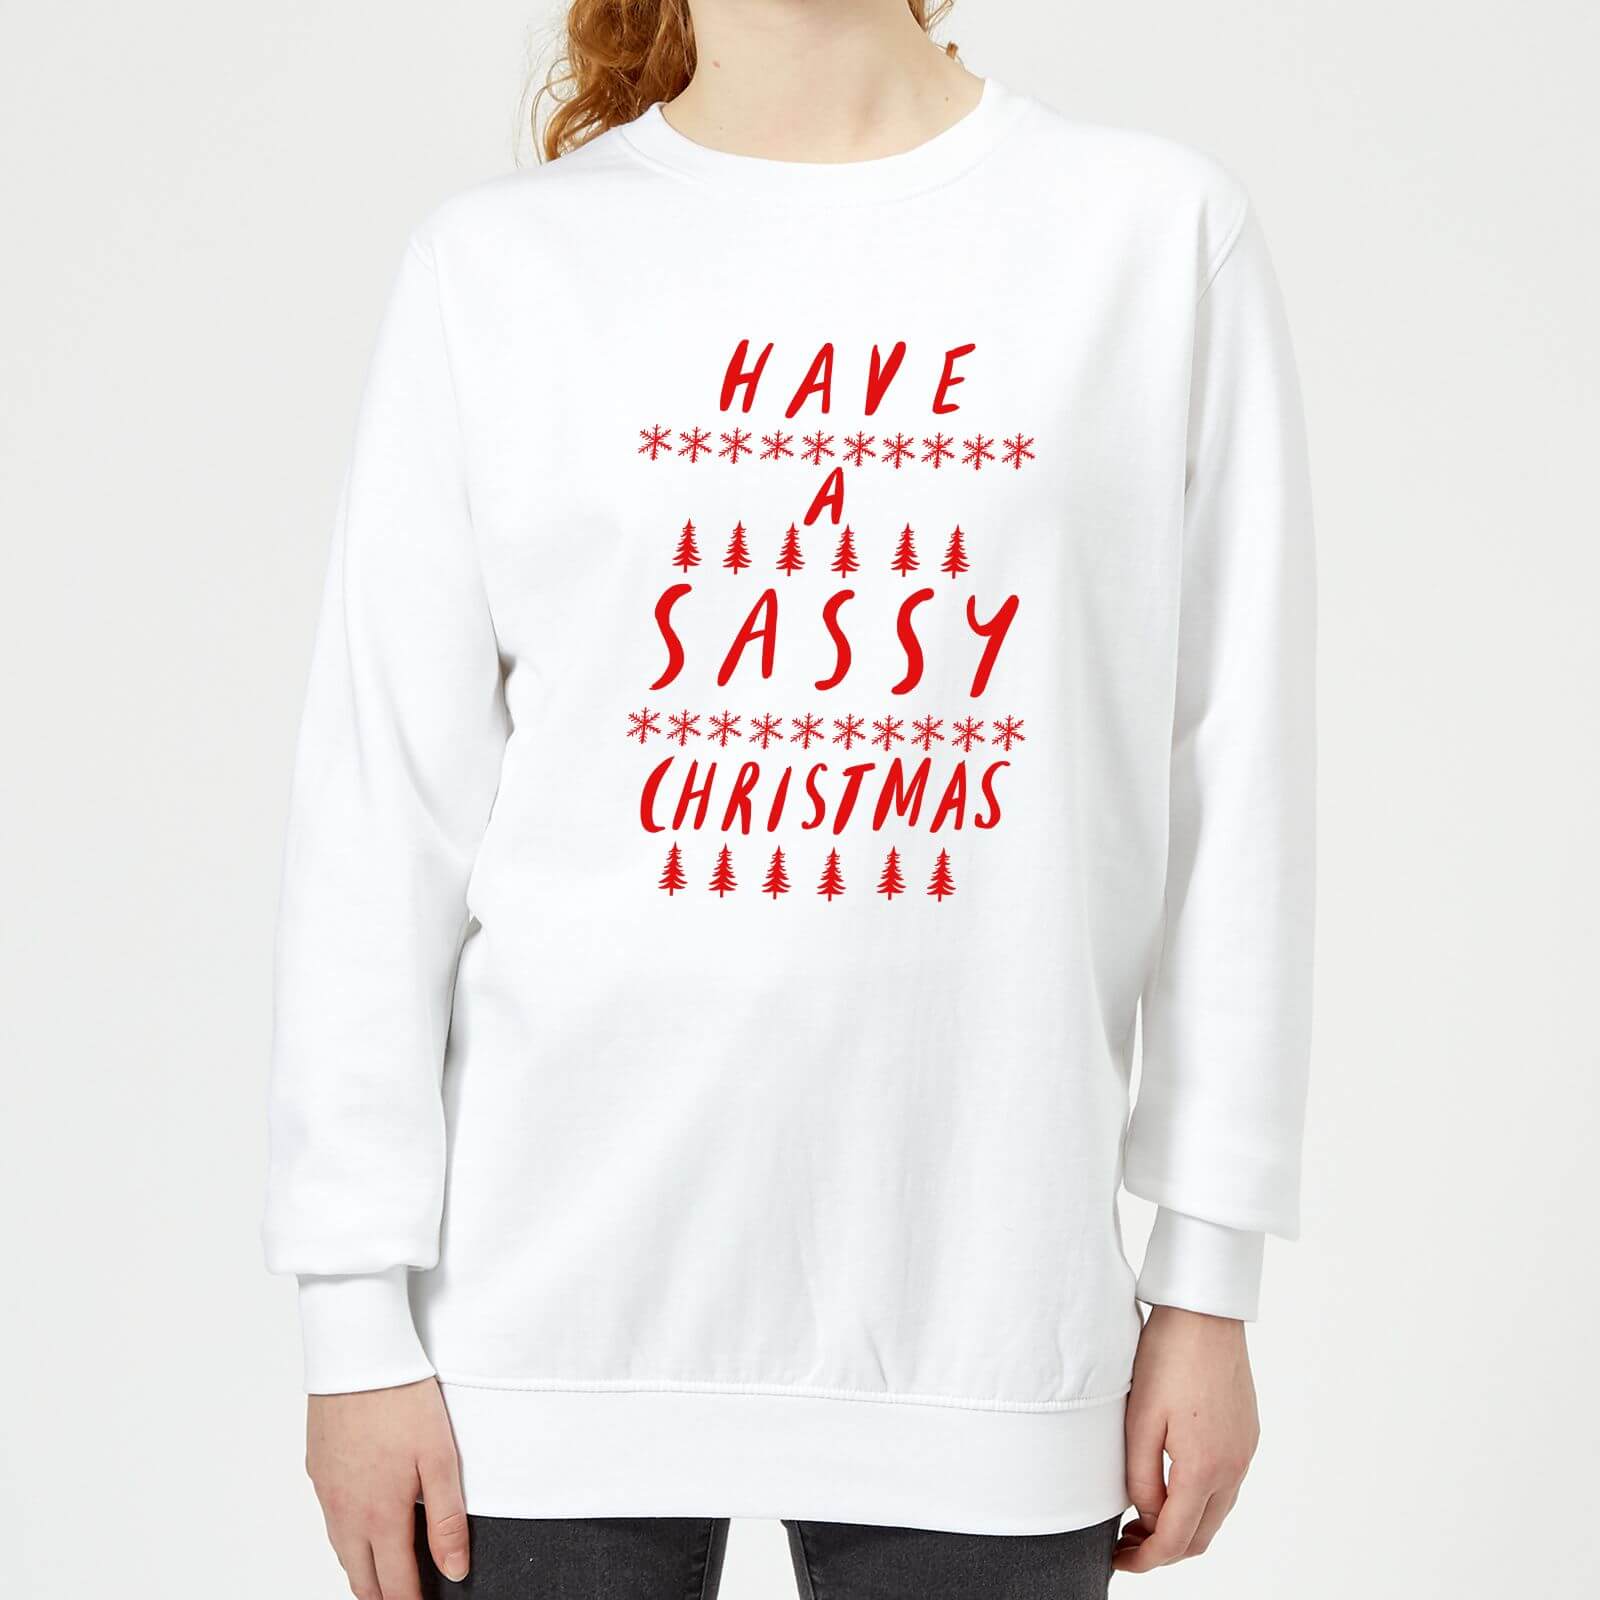 Have A Sassy Christmas Women's Sweatshirt - White - XS - White